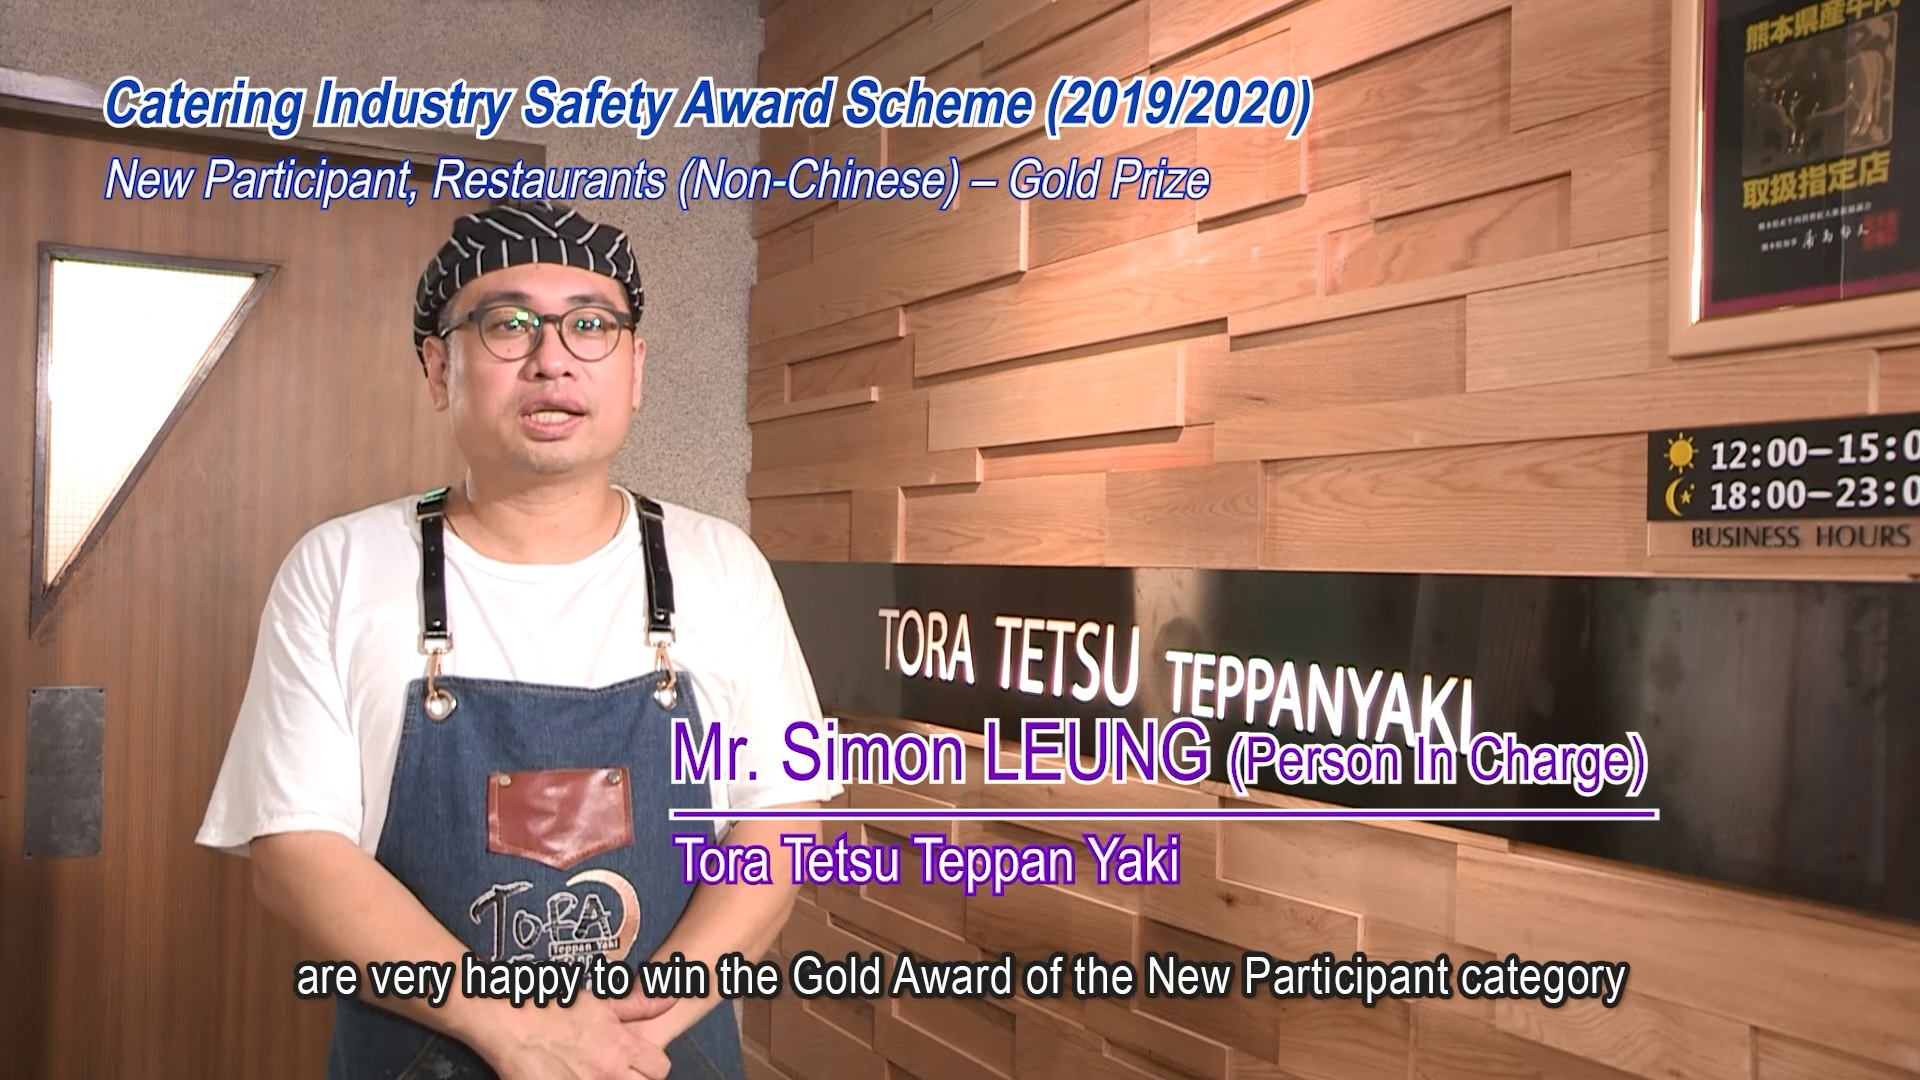 Tora Tetsu Teppan Yaki Restaurants (Non-Chinese) Sub-category under New Participant Award